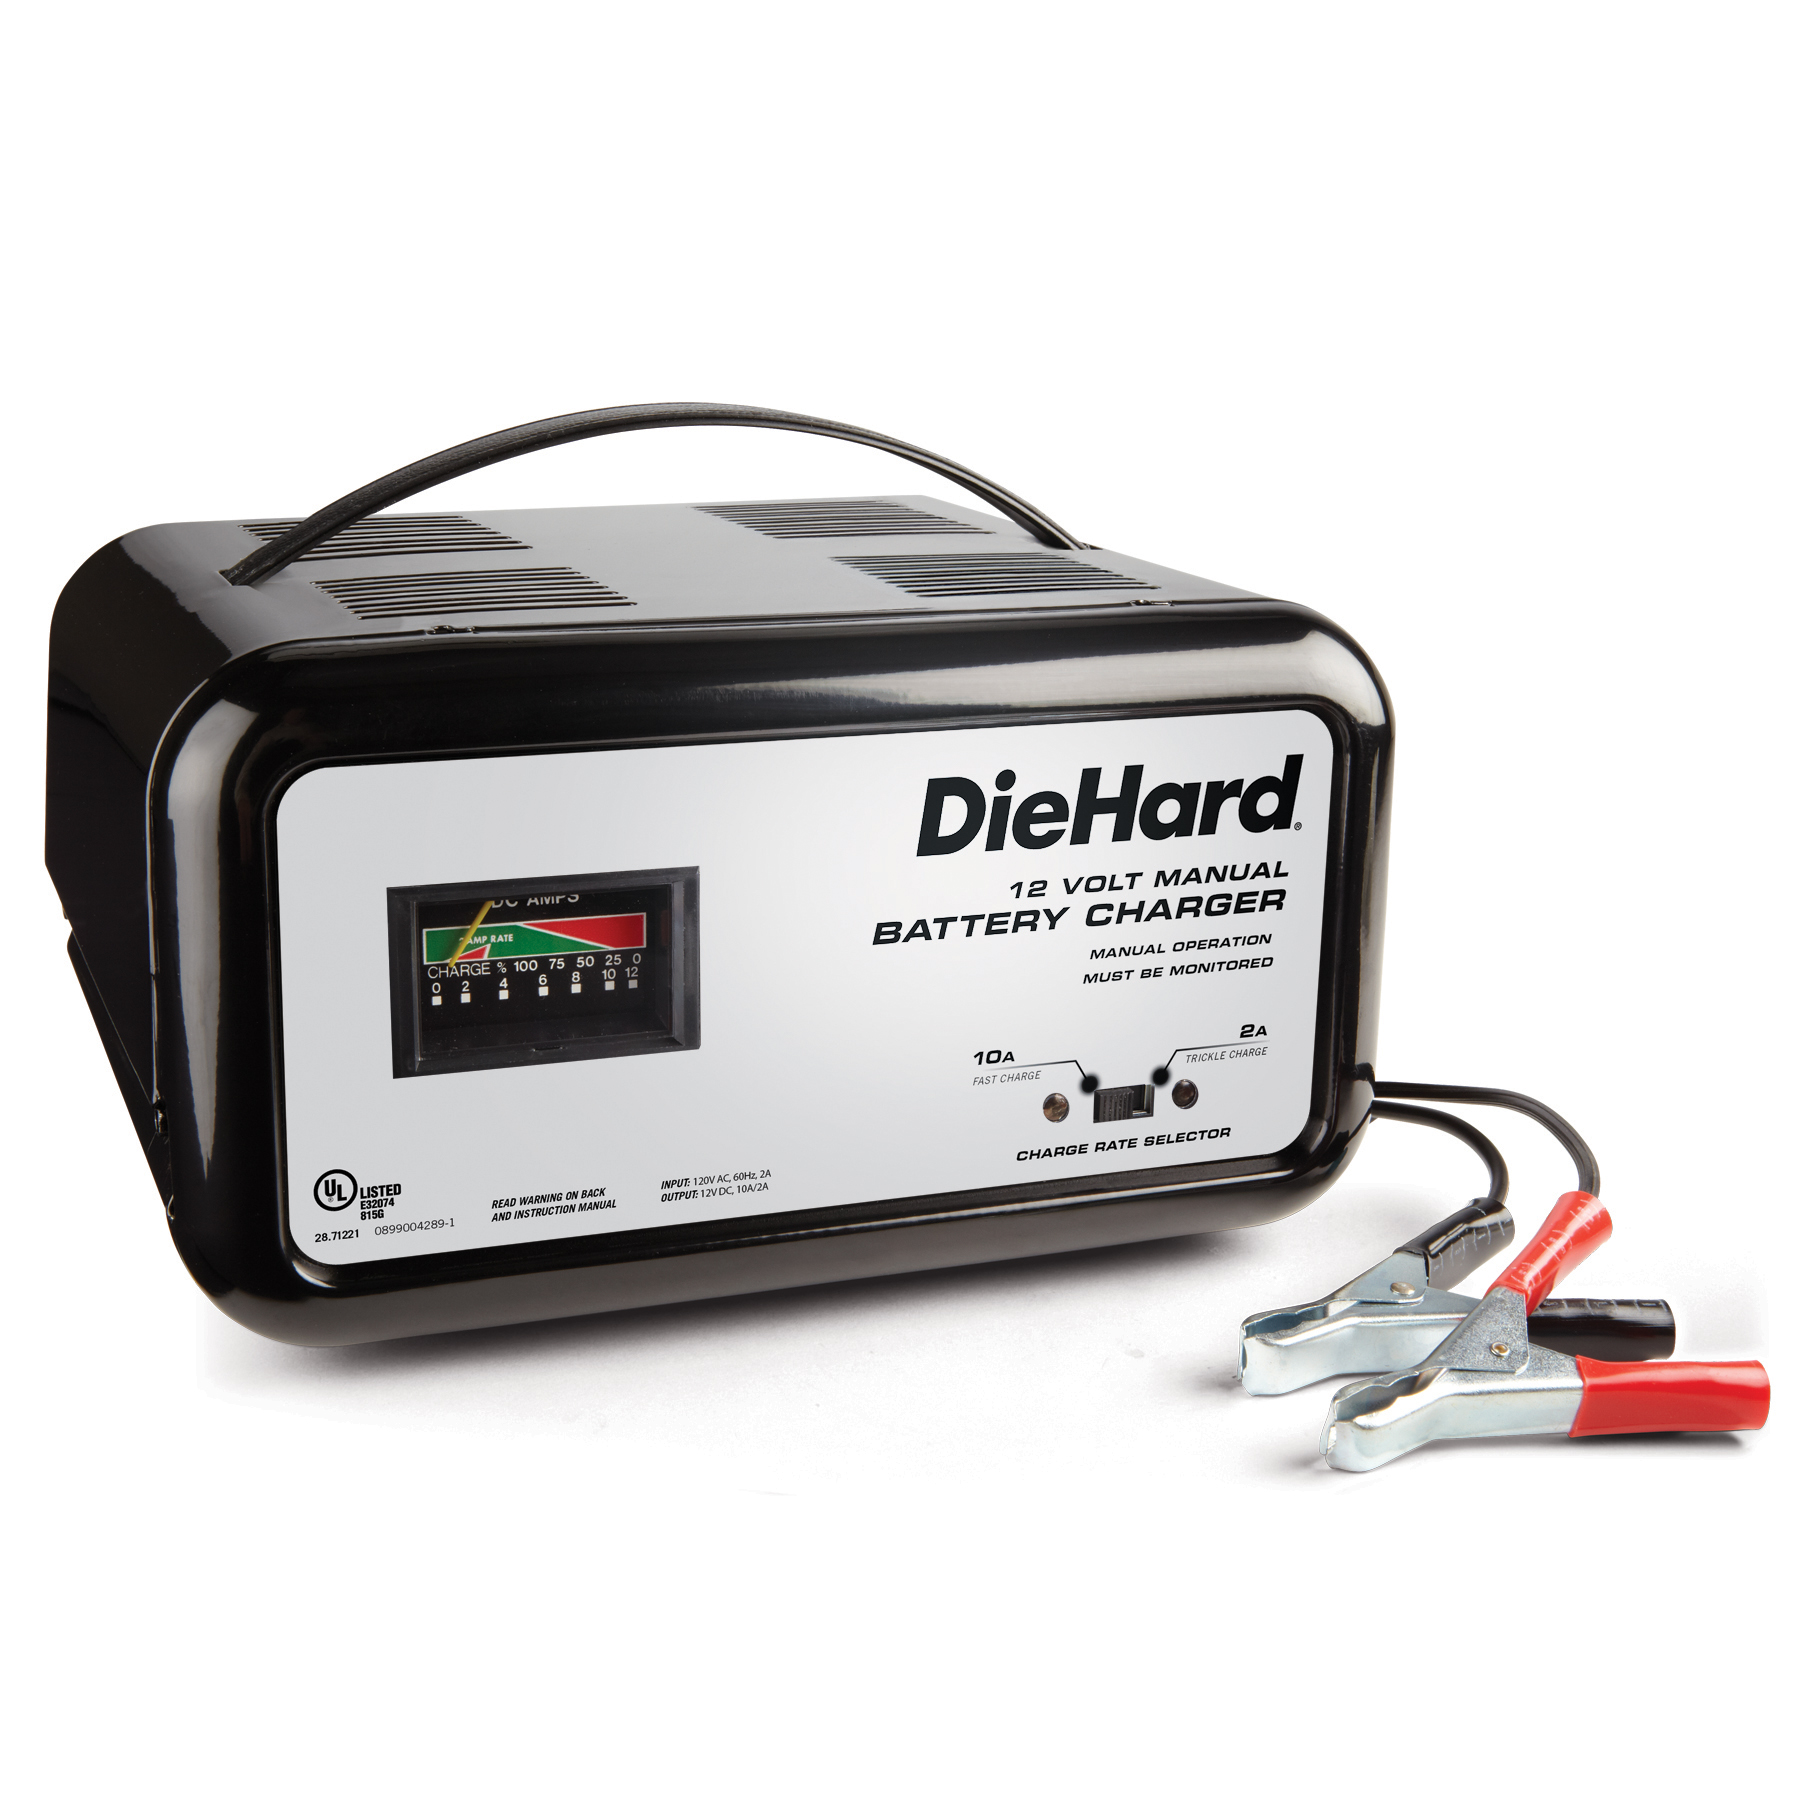 diehard battery charger